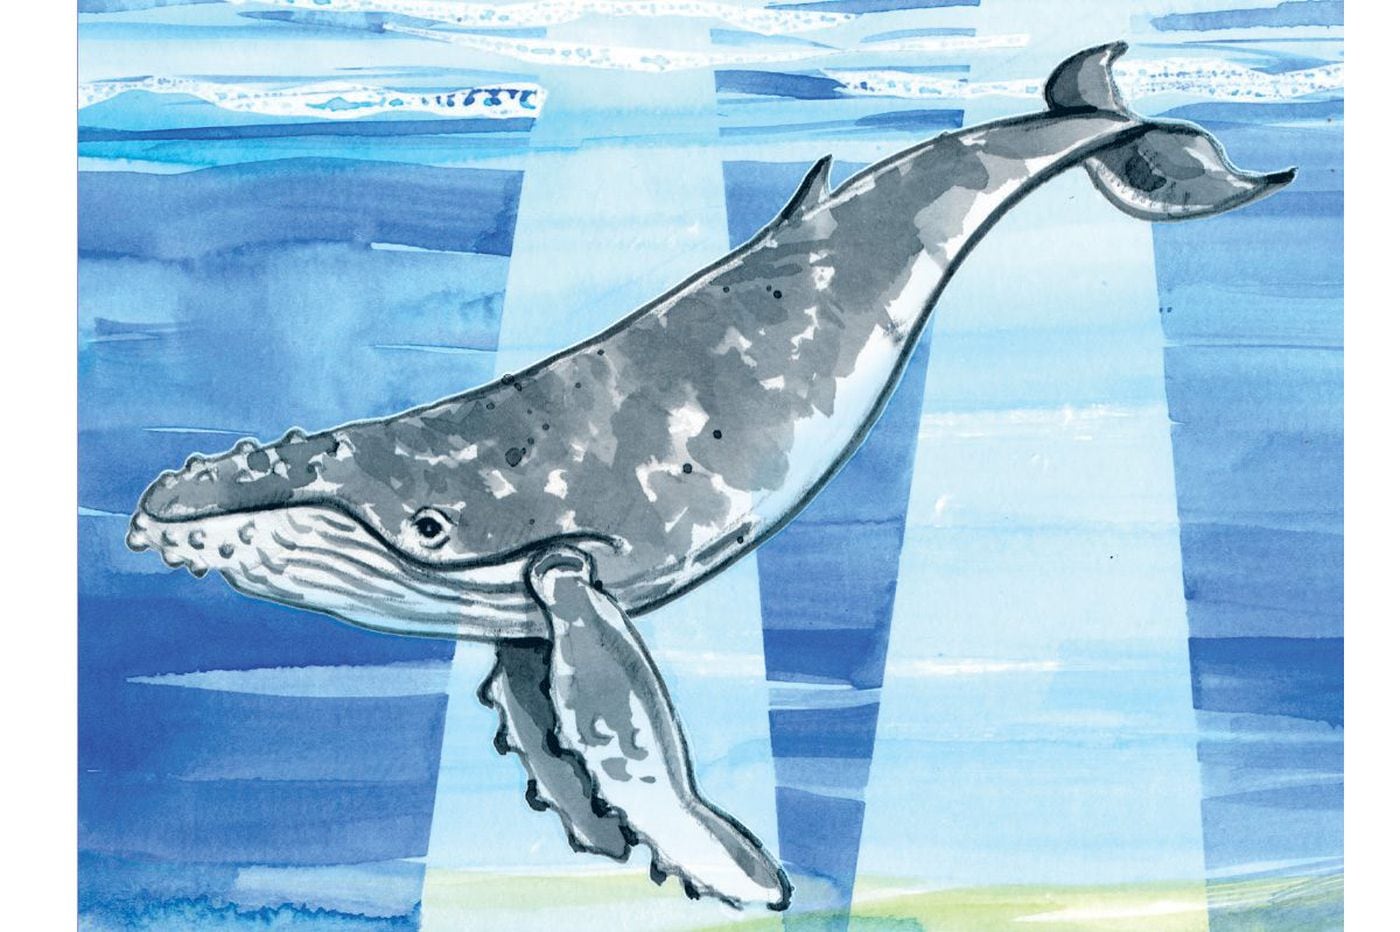 Art Thief Draw a humpback whale